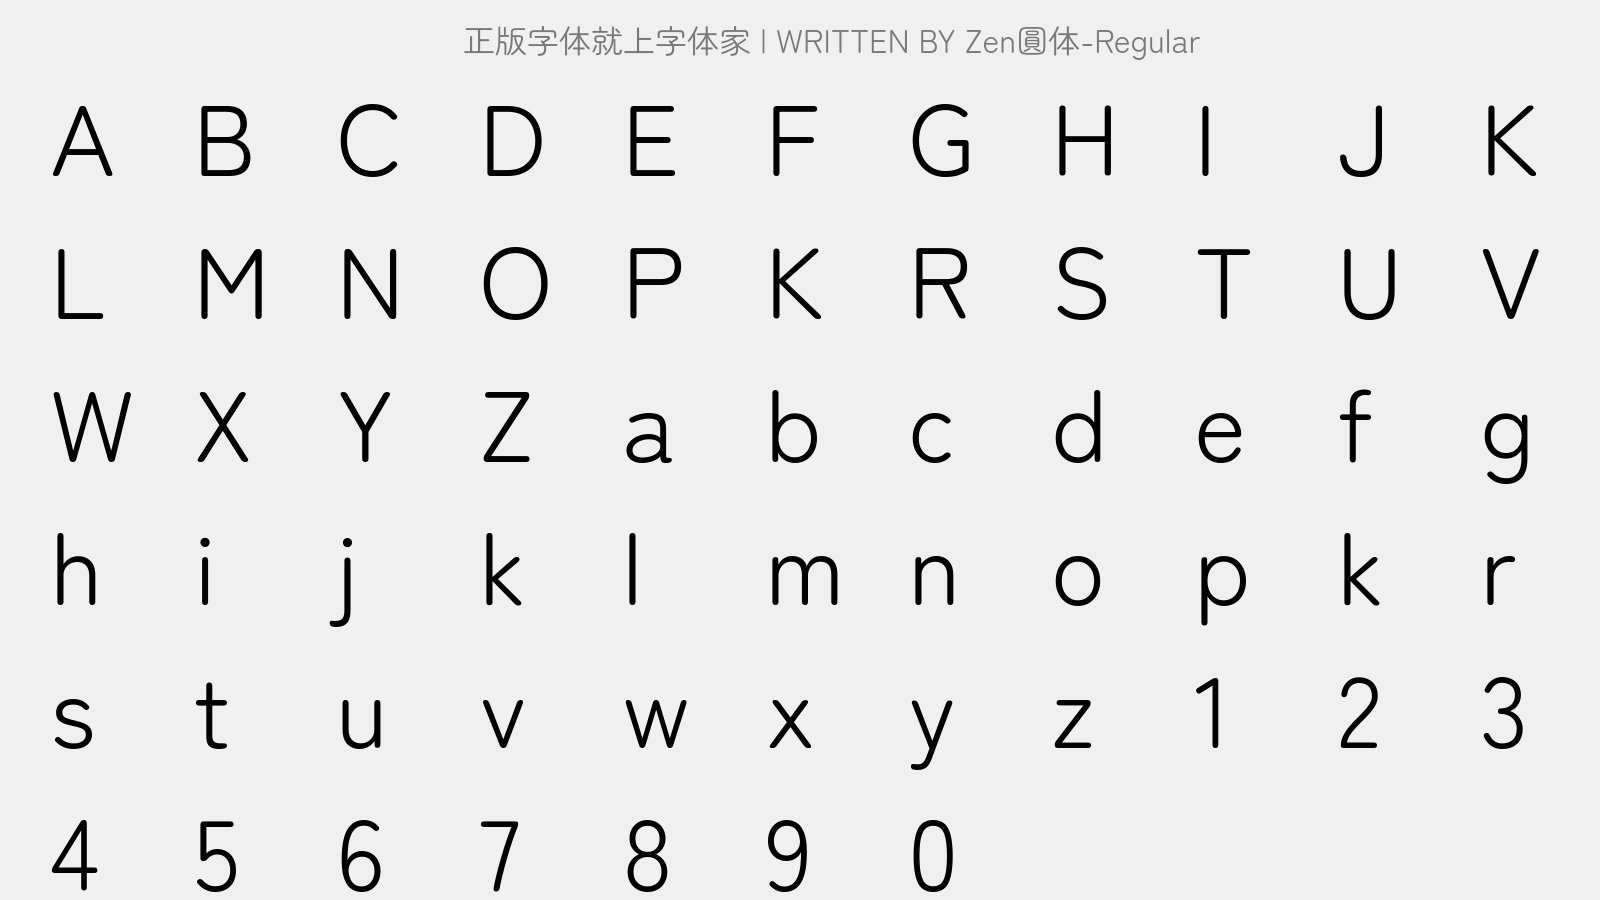 Zen圆体-Regular - 大写字母/小写字母/数字